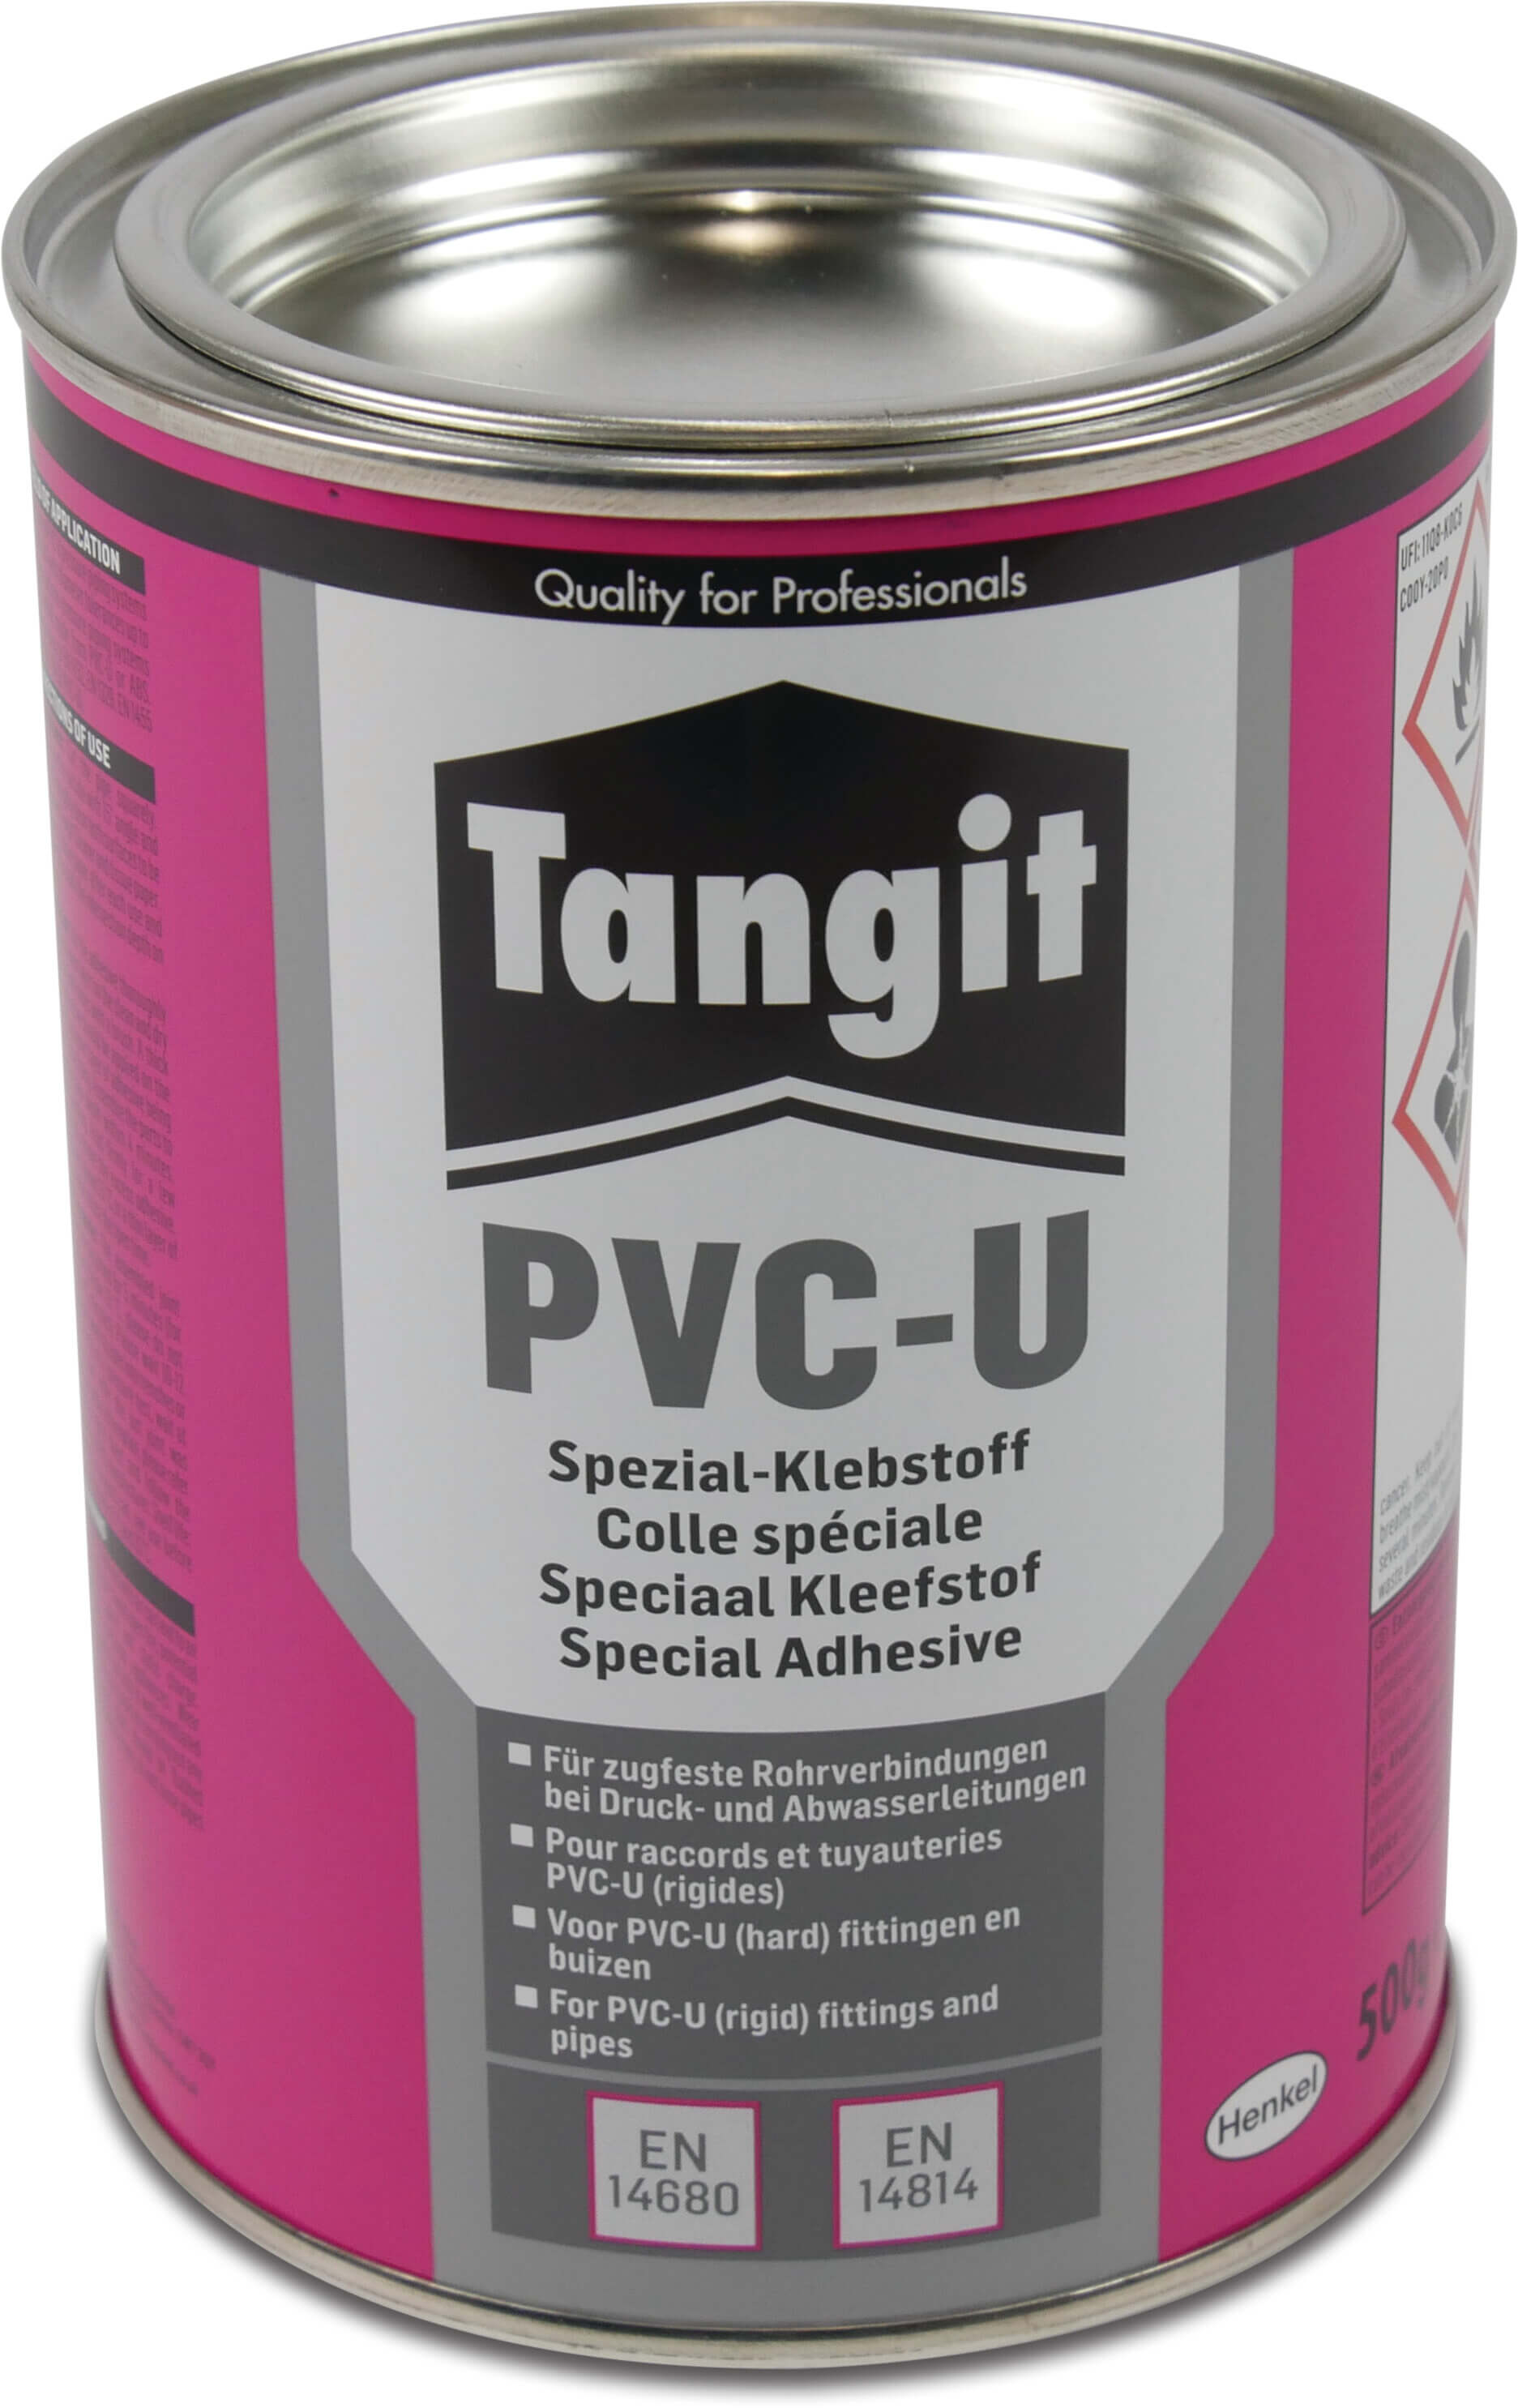 Tangit PVC glue 500g without brush KIWA type All Pressure label EN/DE/NL/FR